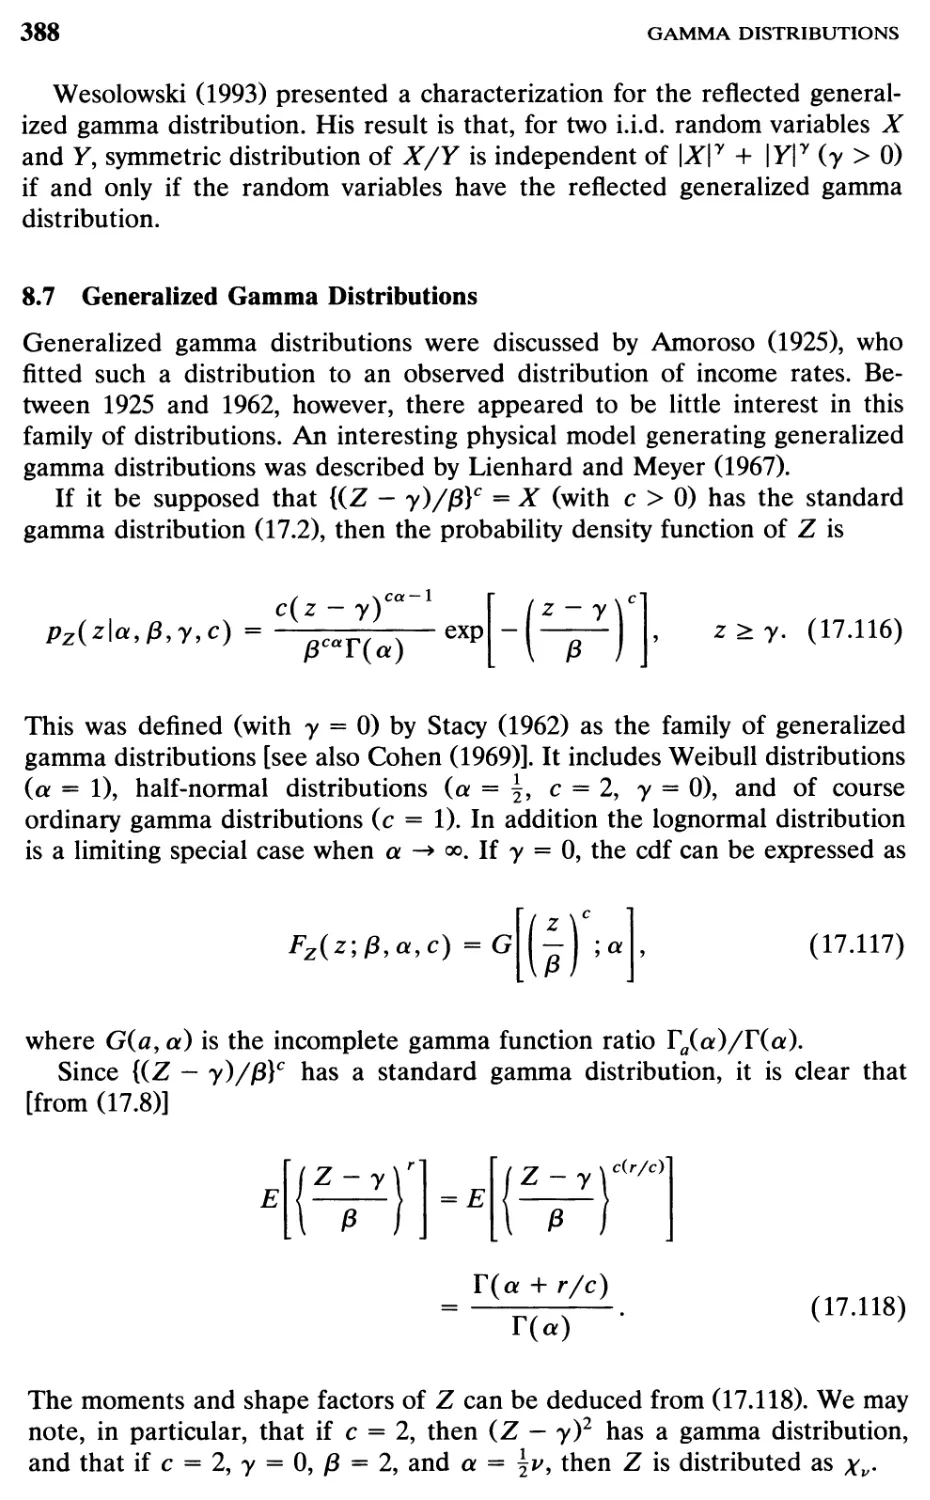 8.7 Generalized Gamma Distributions, 388